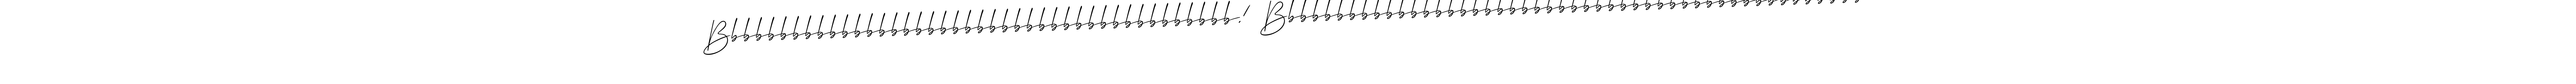 Bbbbbbbbbbbbbbbbbbbbbbbbbbbbbbbbbbbbbbbbbb! Bbbbbbbbbbbbbbbbbbbbbbbbbbbbbbbbbbbbbbbbbbbbbbbb stylish signature style. Best Handwritten Sign (Allison_Script) for my name. Handwritten Signature Collection Ideas for my name Bbbbbbbbbbbbbbbbbbbbbbbbbbbbbbbbbbbbbbbbbb! Bbbbbbbbbbbbbbbbbbbbbbbbbbbbbbbbbbbbbbbbbbbbbbbb. Bbbbbbbbbbbbbbbbbbbbbbbbbbbbbbbbbbbbbbbbbb! Bbbbbbbbbbbbbbbbbbbbbbbbbbbbbbbbbbbbbbbbbbbbbbbb signature style 2 images and pictures png